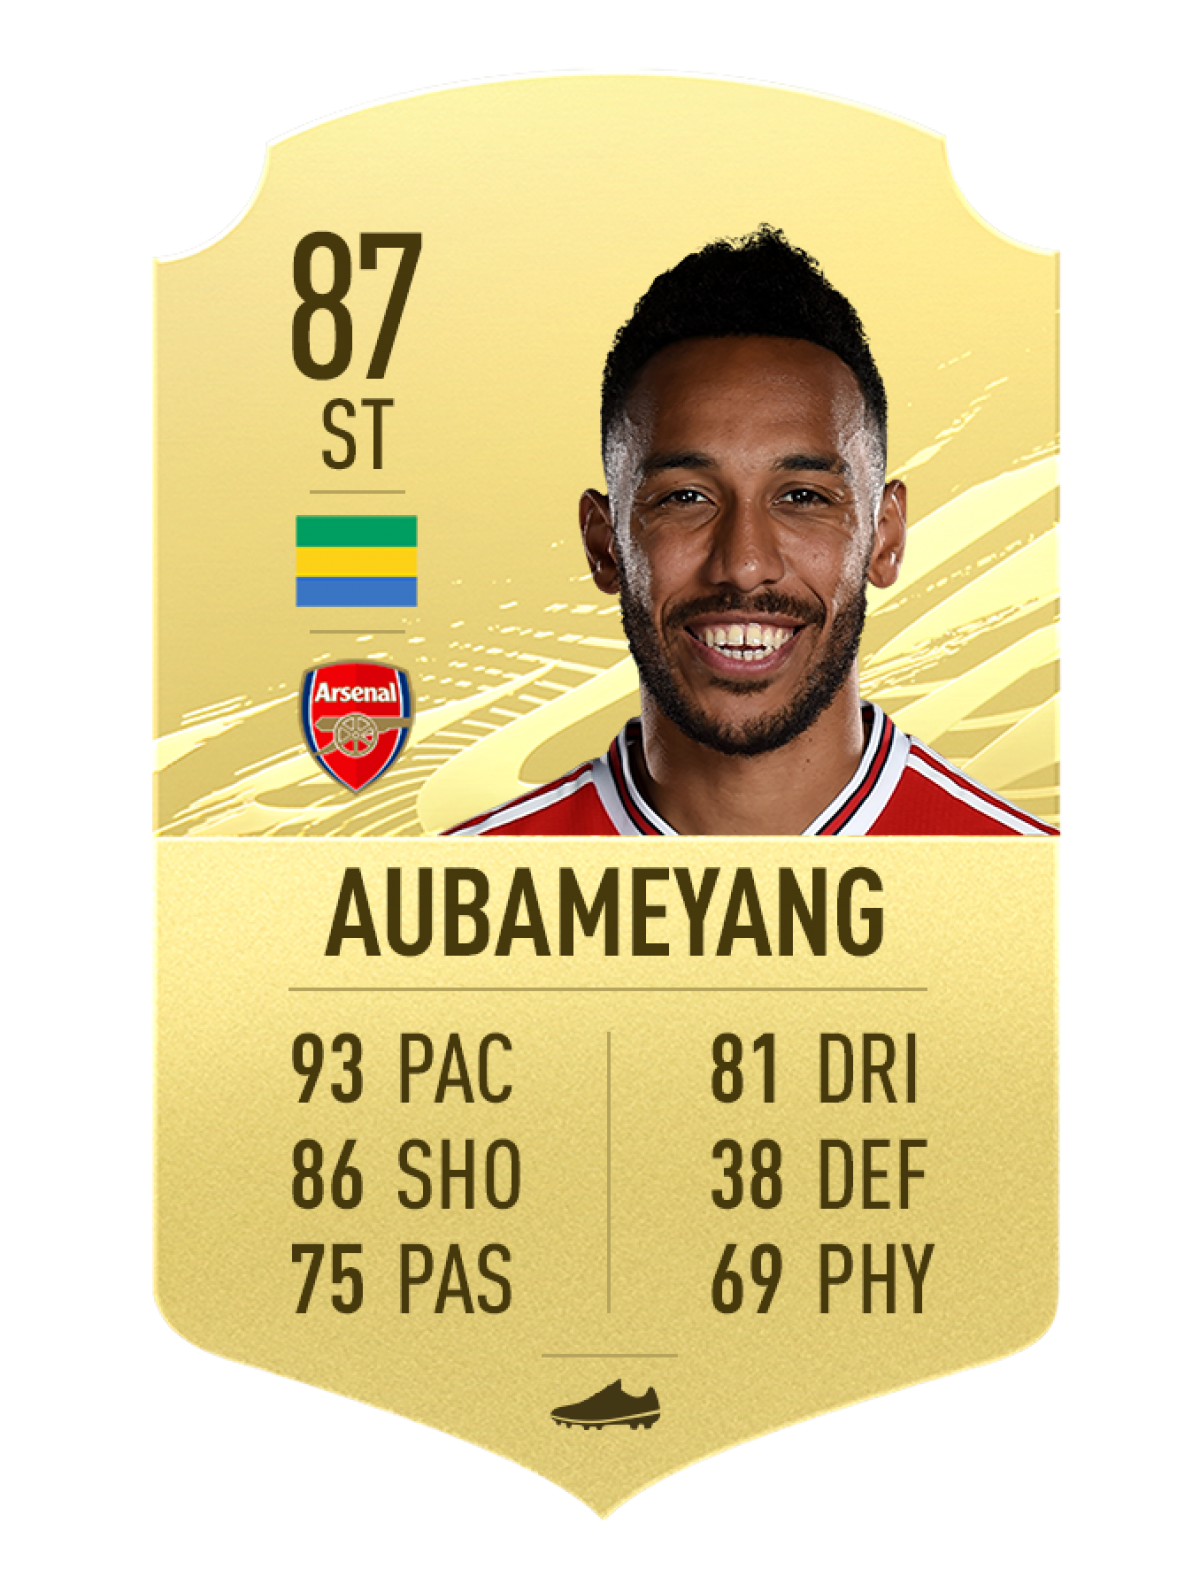 Aubameyang (Gabon/Arsenal - Chỉ số chung 87)